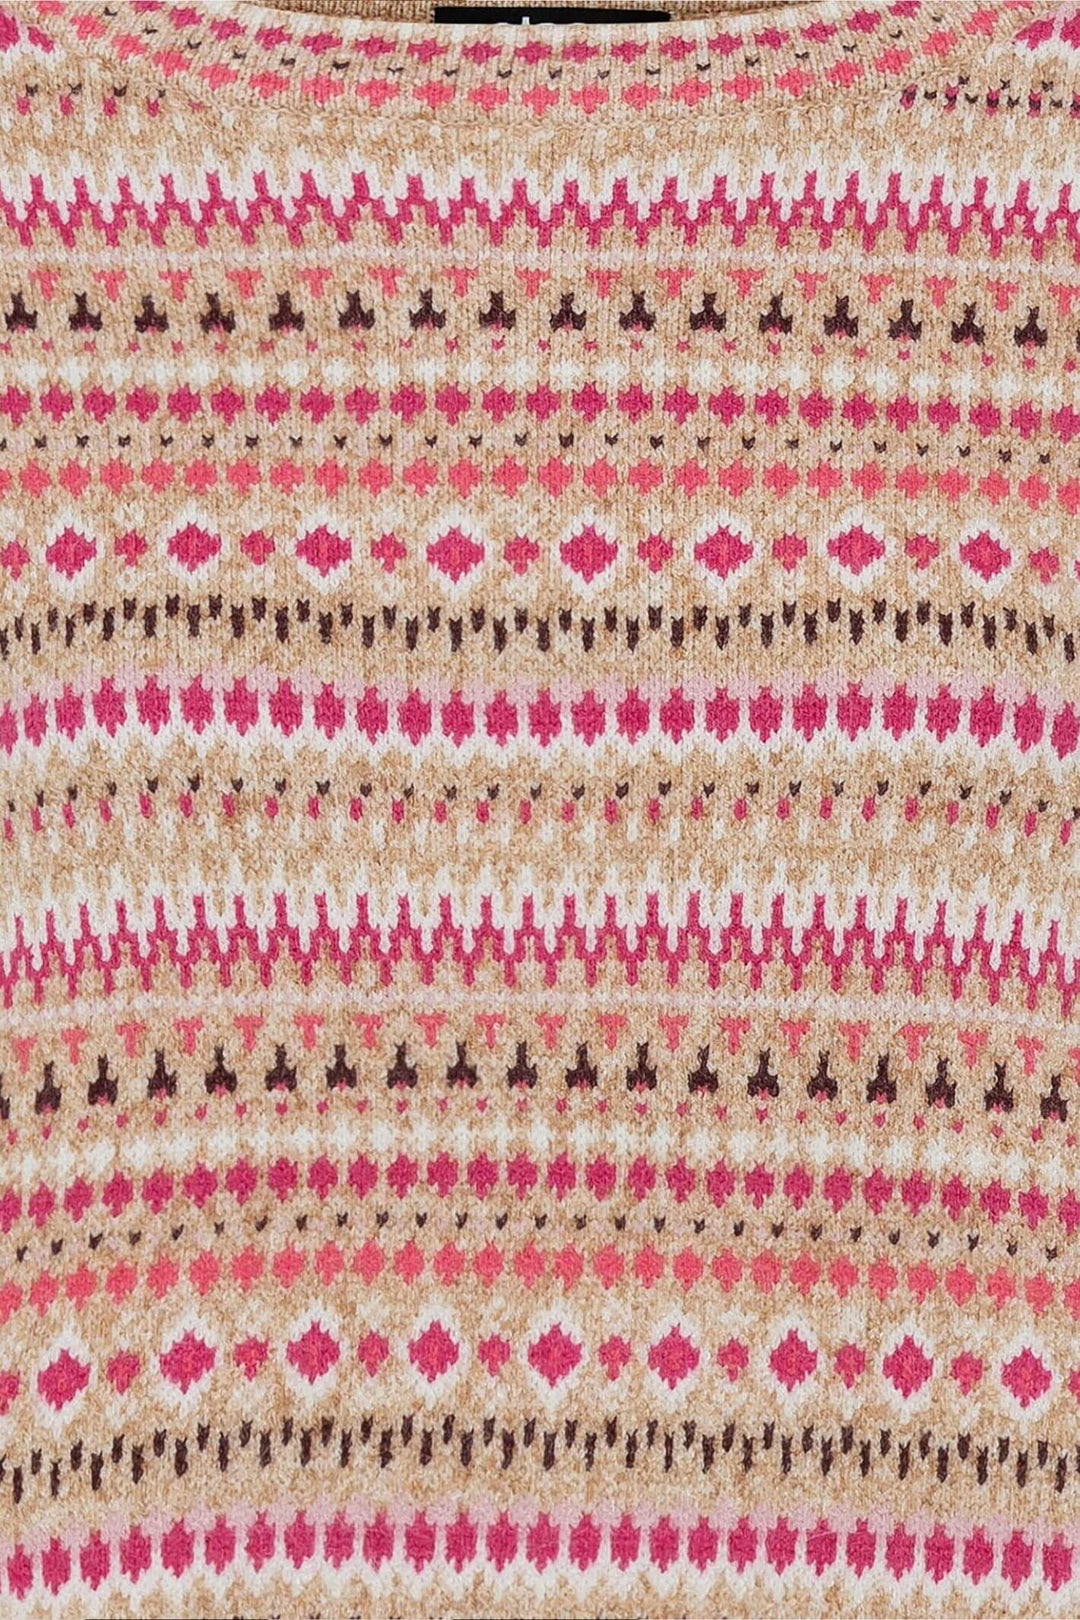 Olsen 11004219 French Rose Striped Knit Jumper